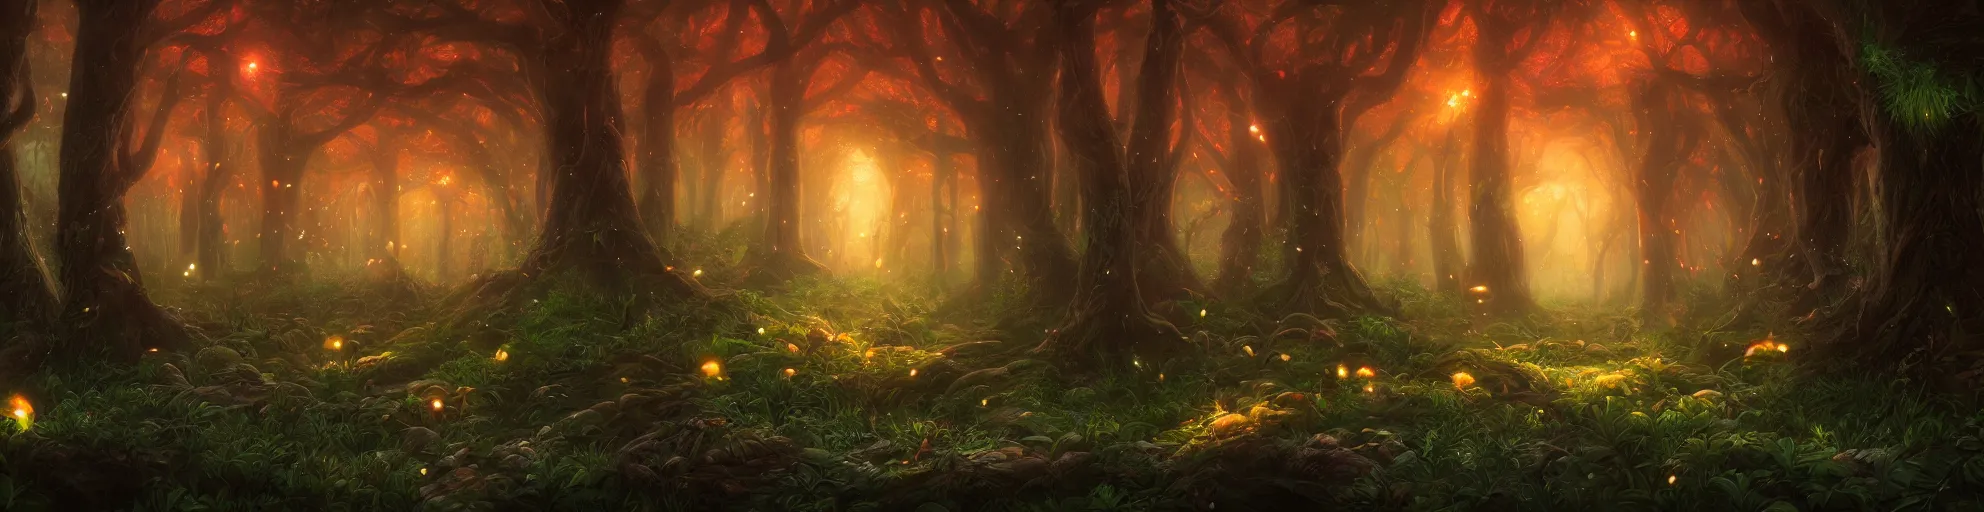 Prompt: Magical forest, fireflies, bioluminescent mushrooms, trending on artstation, wide angle, noah bradley